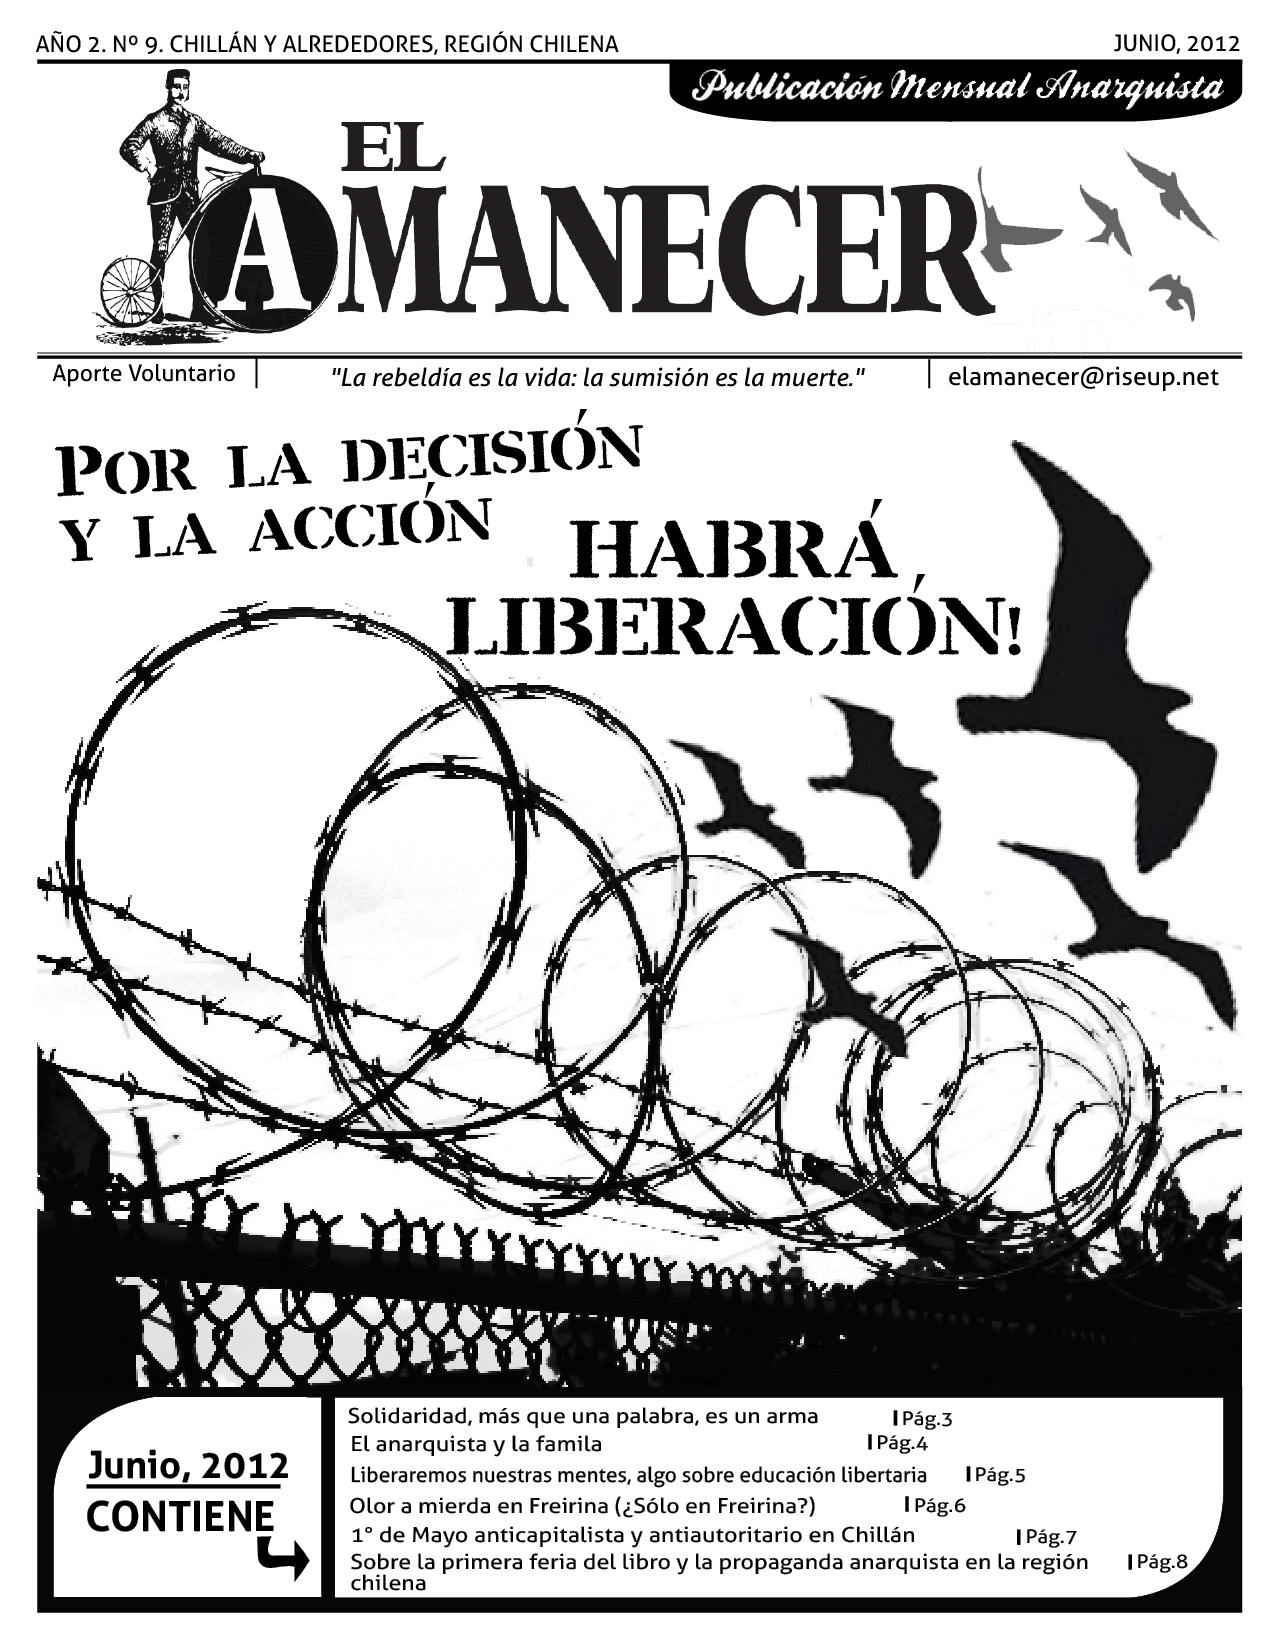 http://periodicoelamanecer.files.wordpress.com/2012/05/periodico-anarquista-el-amanecer-junio-2012.jpg